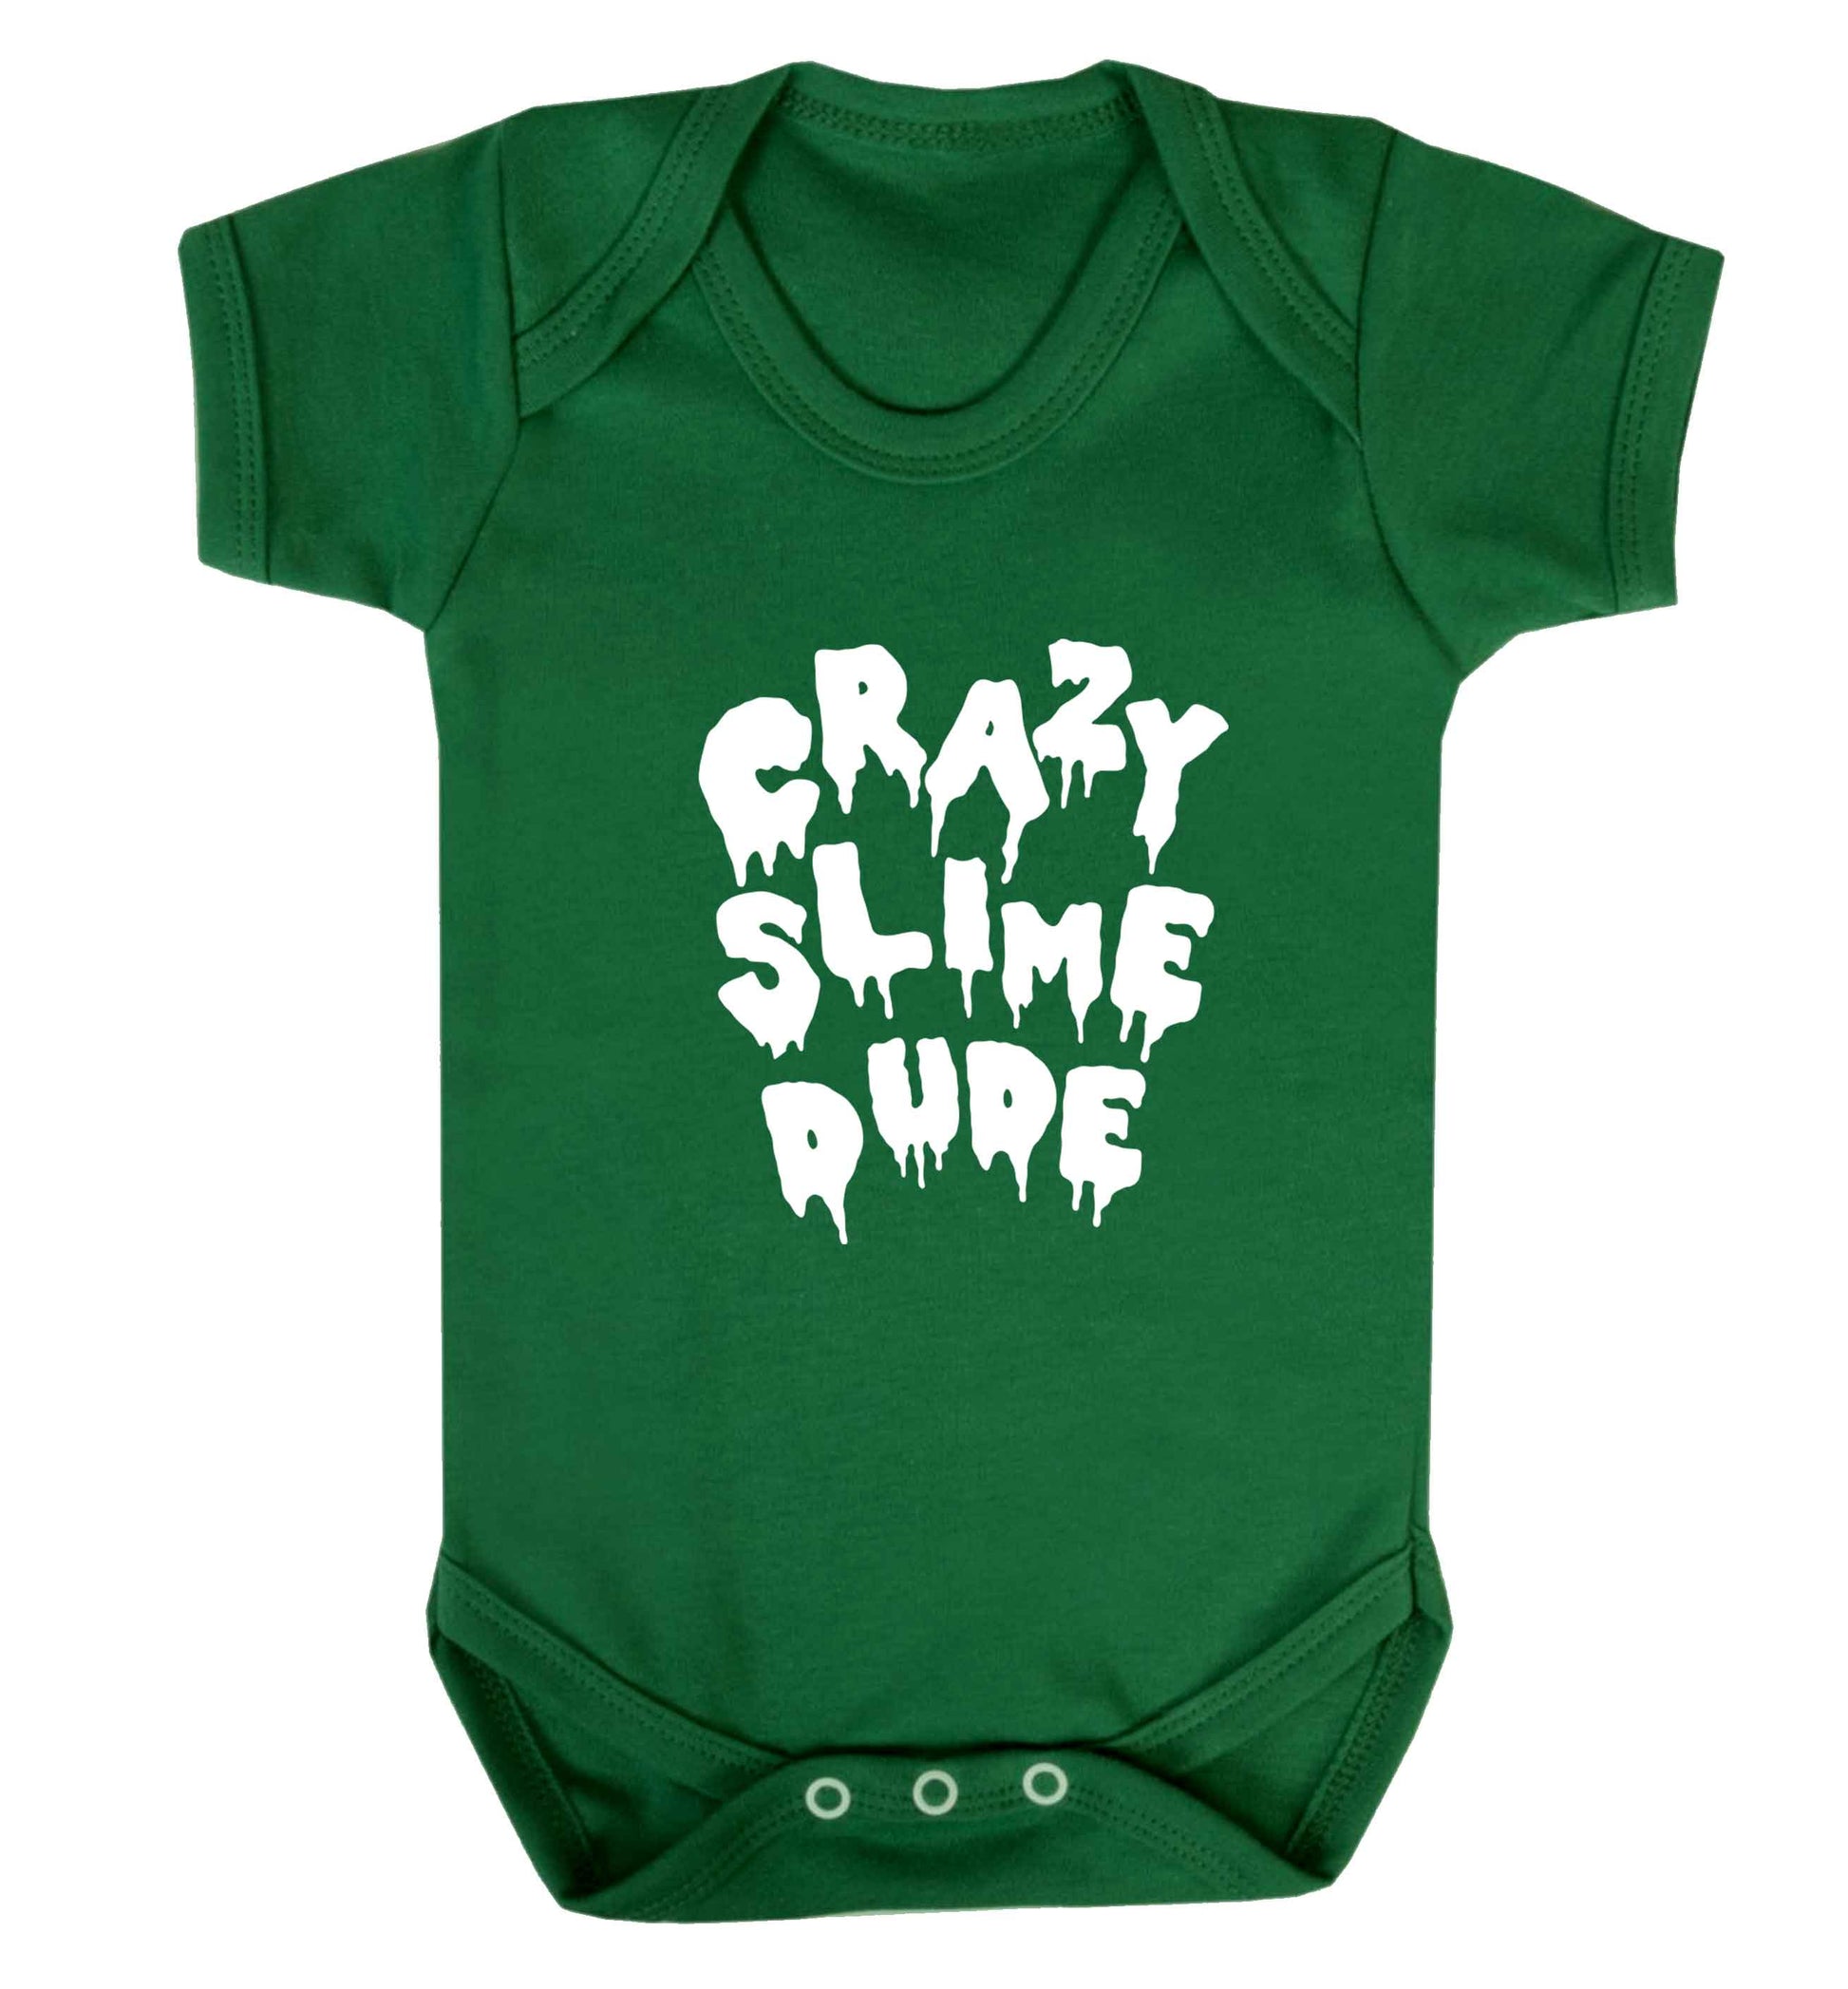 Crazy slime dude baby vest green 18-24 months